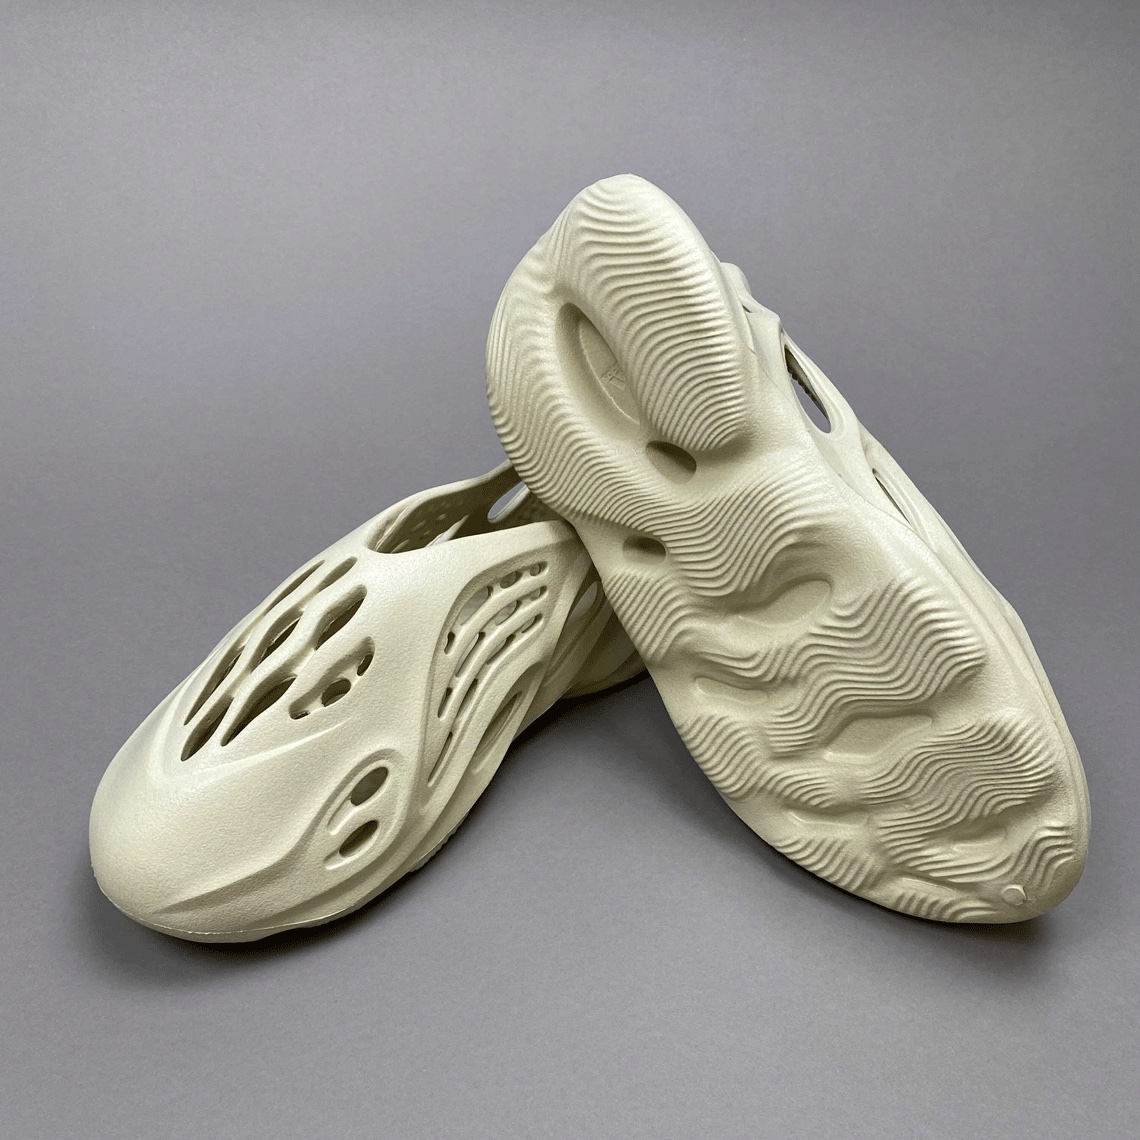 Adidas Yeezy Foam Runner Sand Fy4567 5